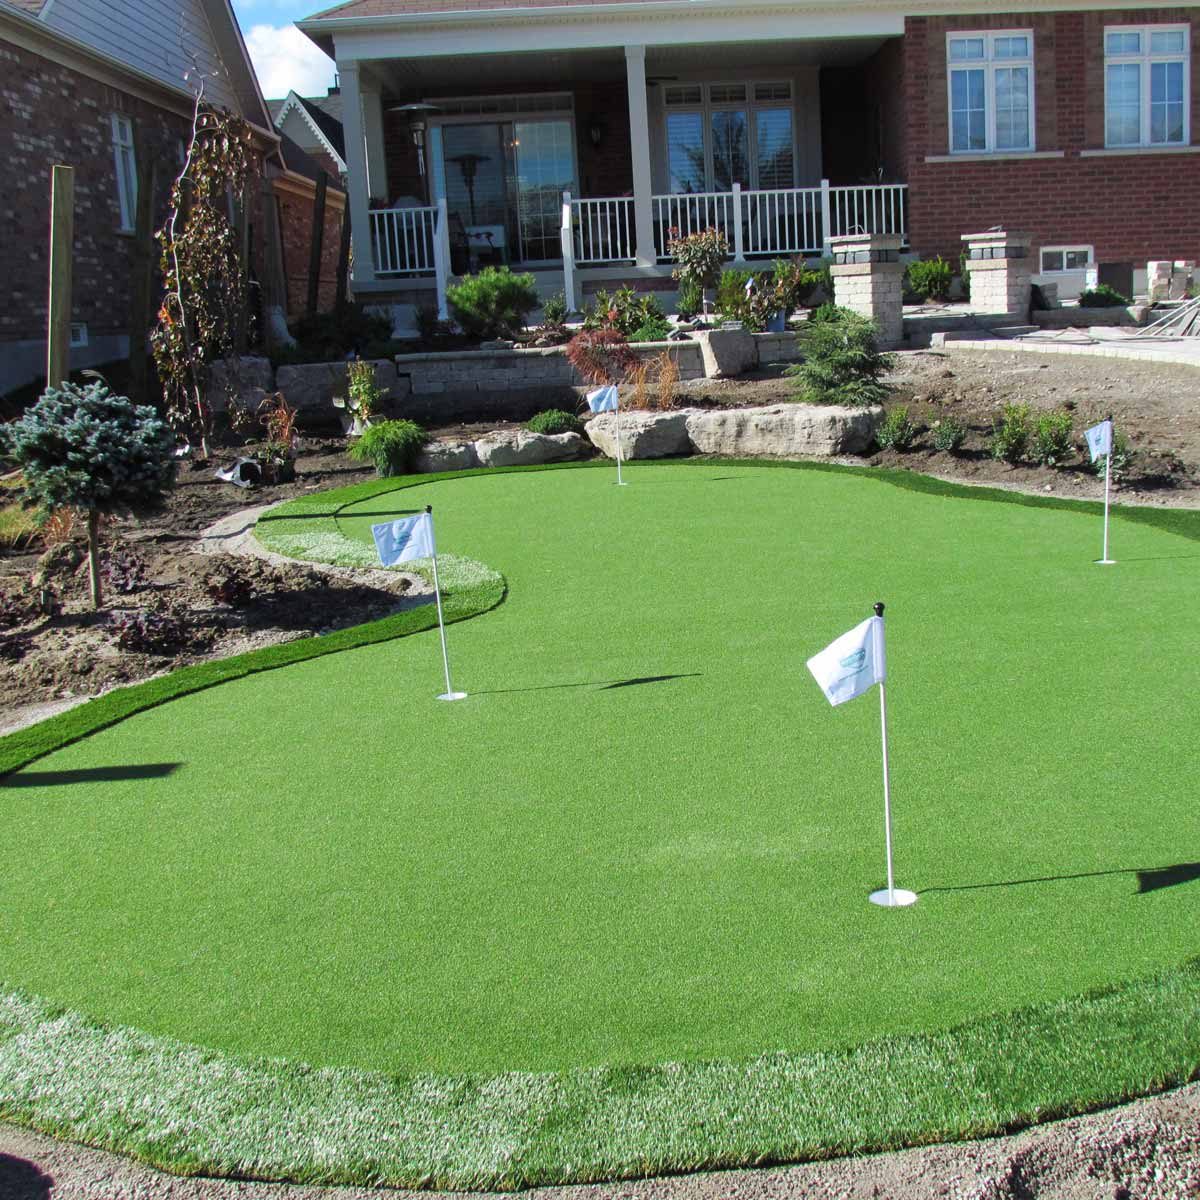 putting backyard greens crazy cool turf synthetic landscaping golf artificial outdoor diy garden patio familyhandyman lawn